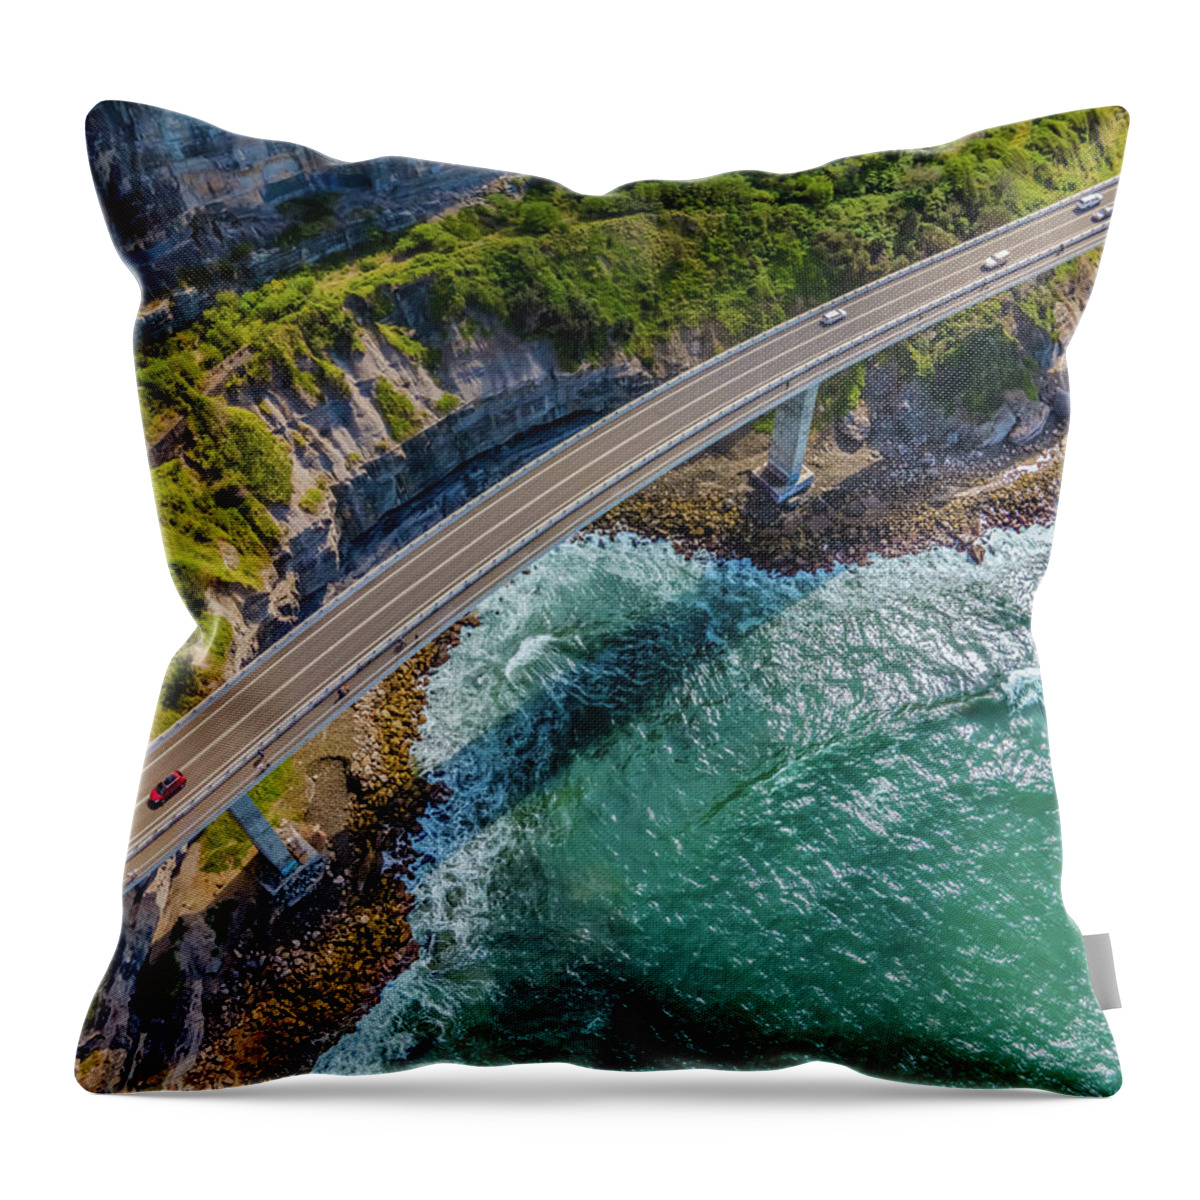 Bridge Throw Pillow featuring the photograph Sea Cliff Bridge No 3 by Andre Petrov